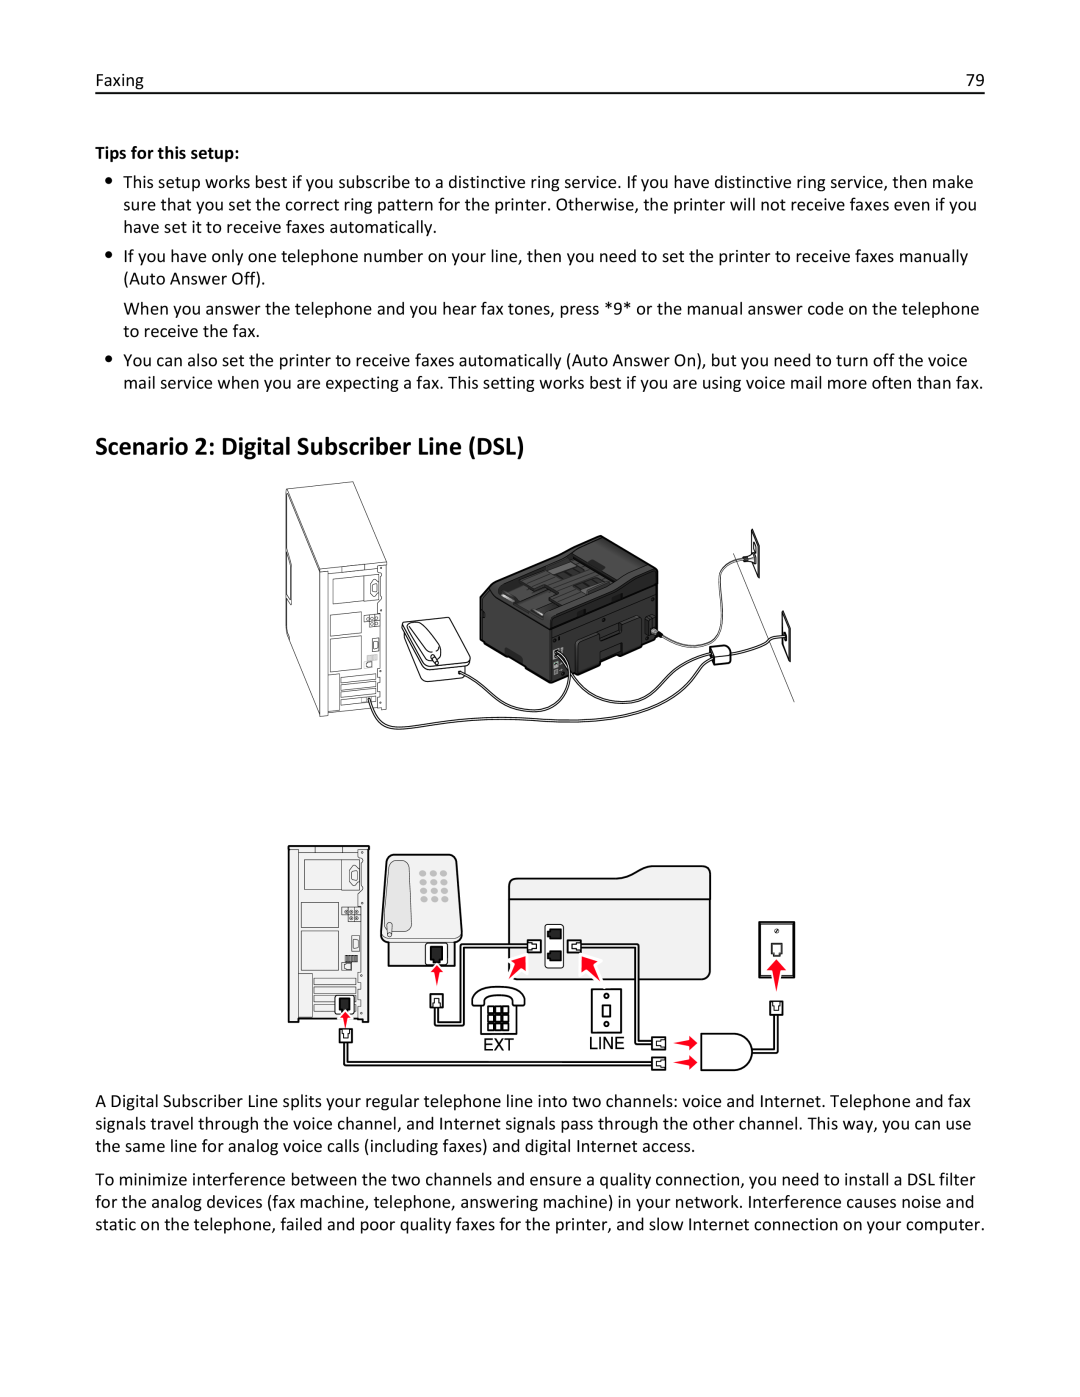 Lexmark PRO4000C, 90P3000 manual Scenario 2 Digital Subscriber Line DSL, Tips for this setup 